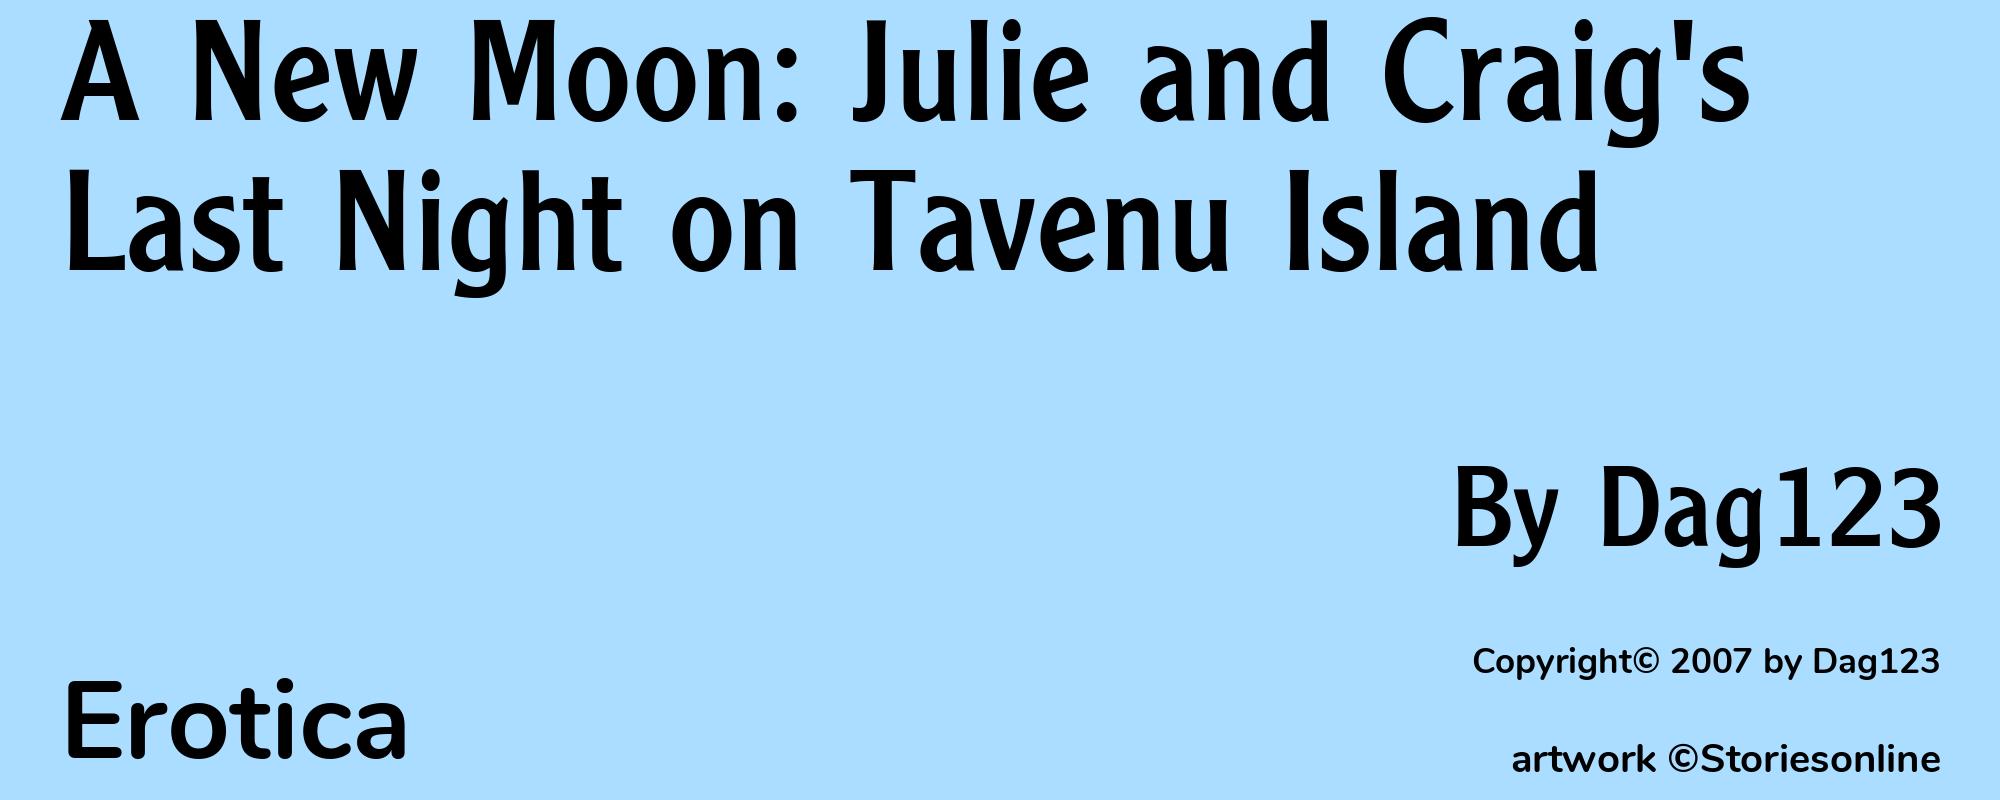 A New Moon: Julie and Craig's Last Night on Tavenu Island - Cover